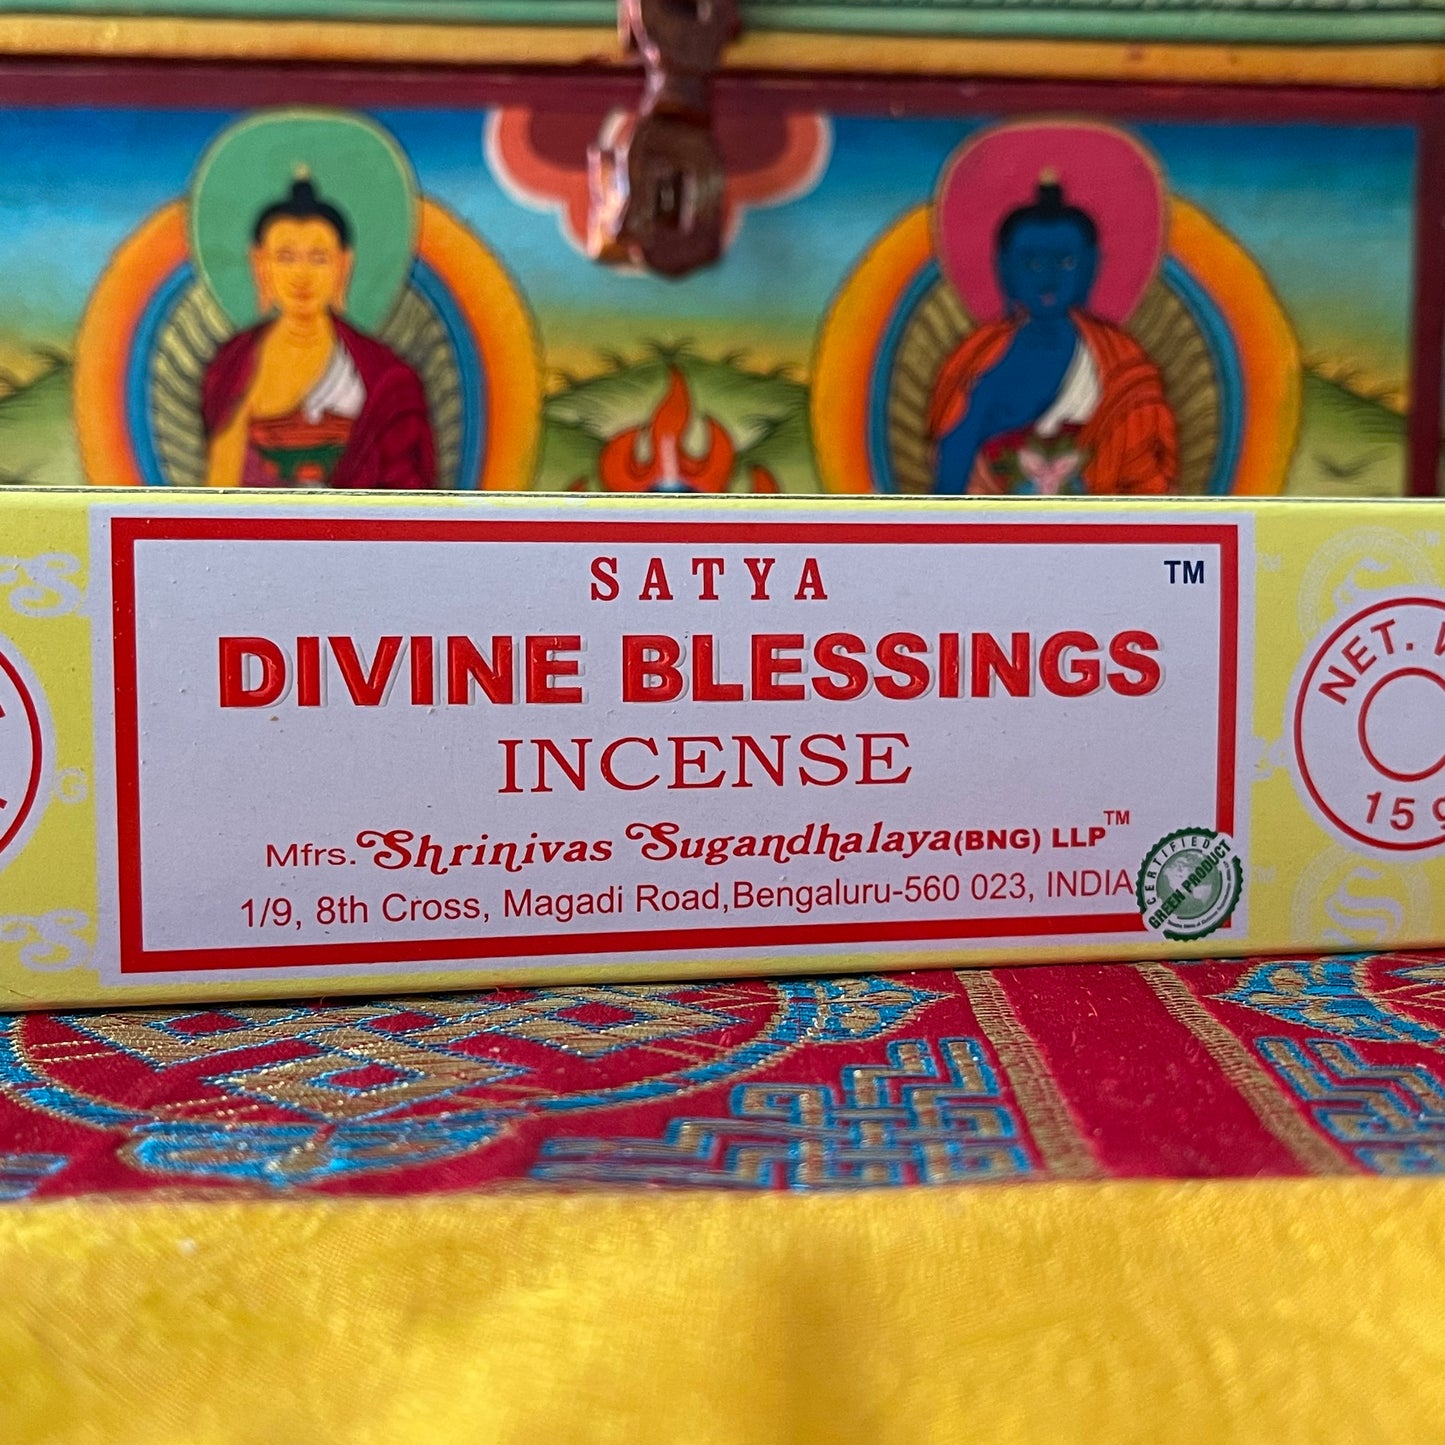 Satya Divine Blessings Incense